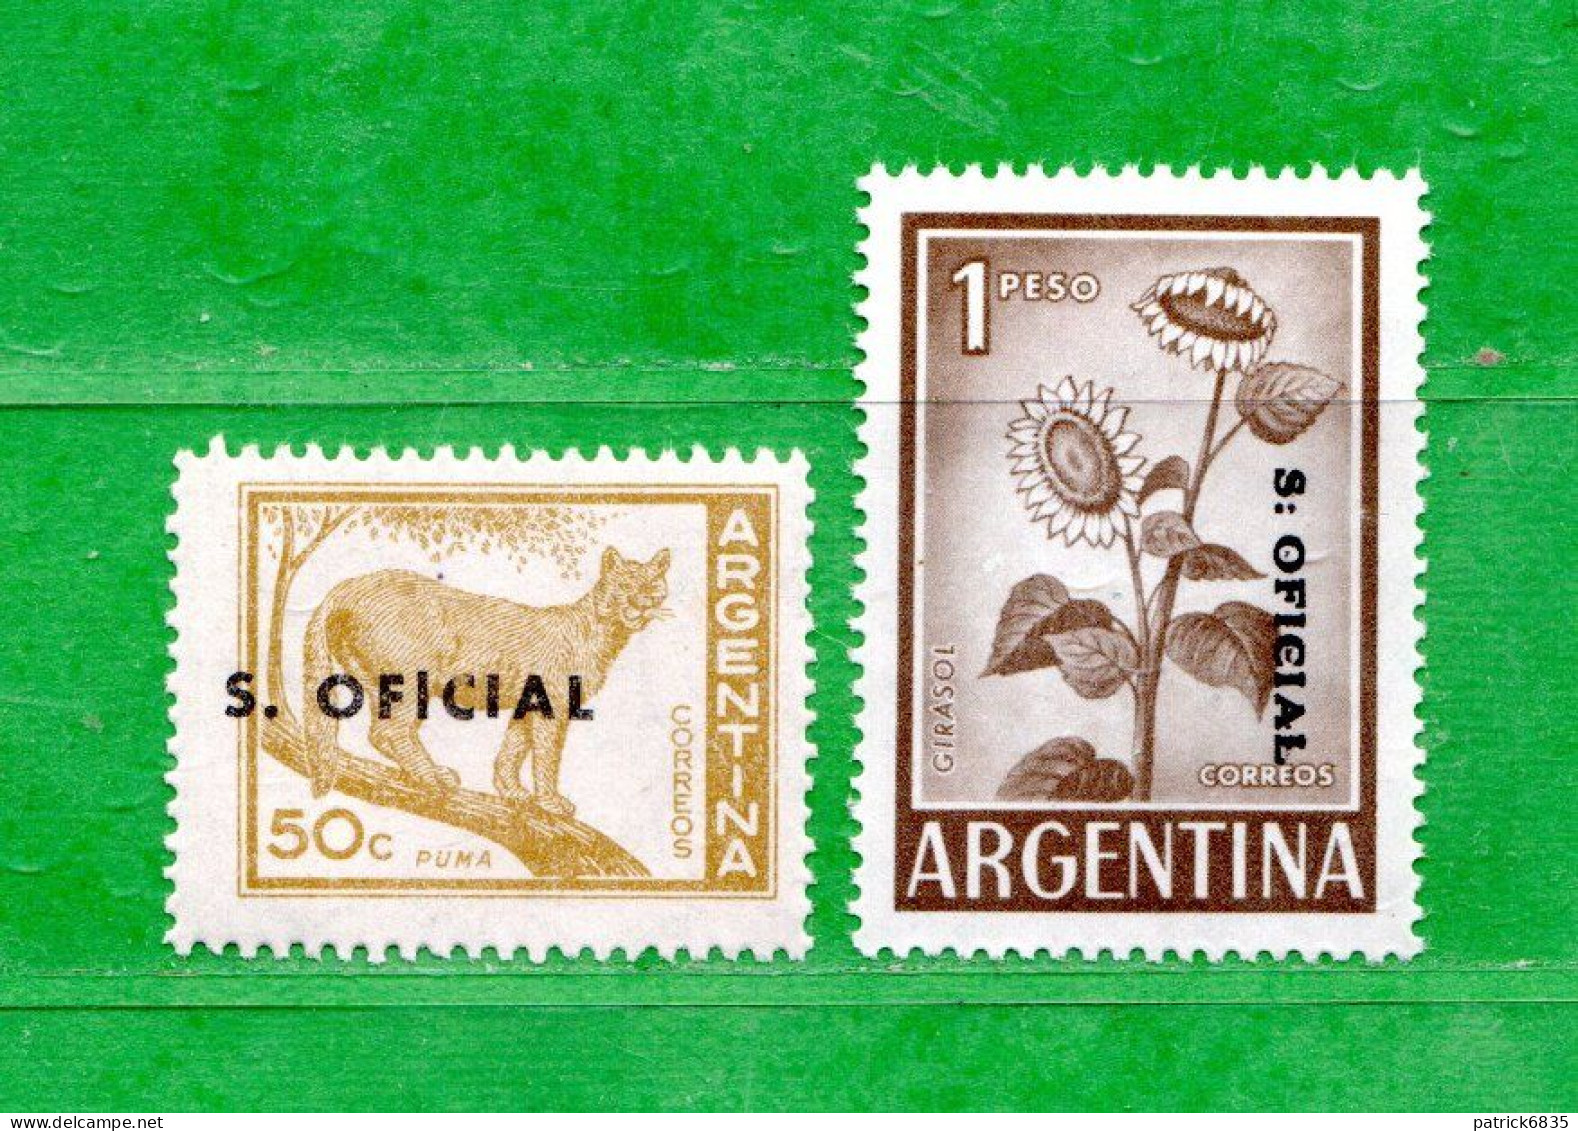 (Mn.1 ) Argentina - ** 1959- S.OFICIAL - PUMA - Tournesol.  Yvert  383-386A.  MNH** - Servizio